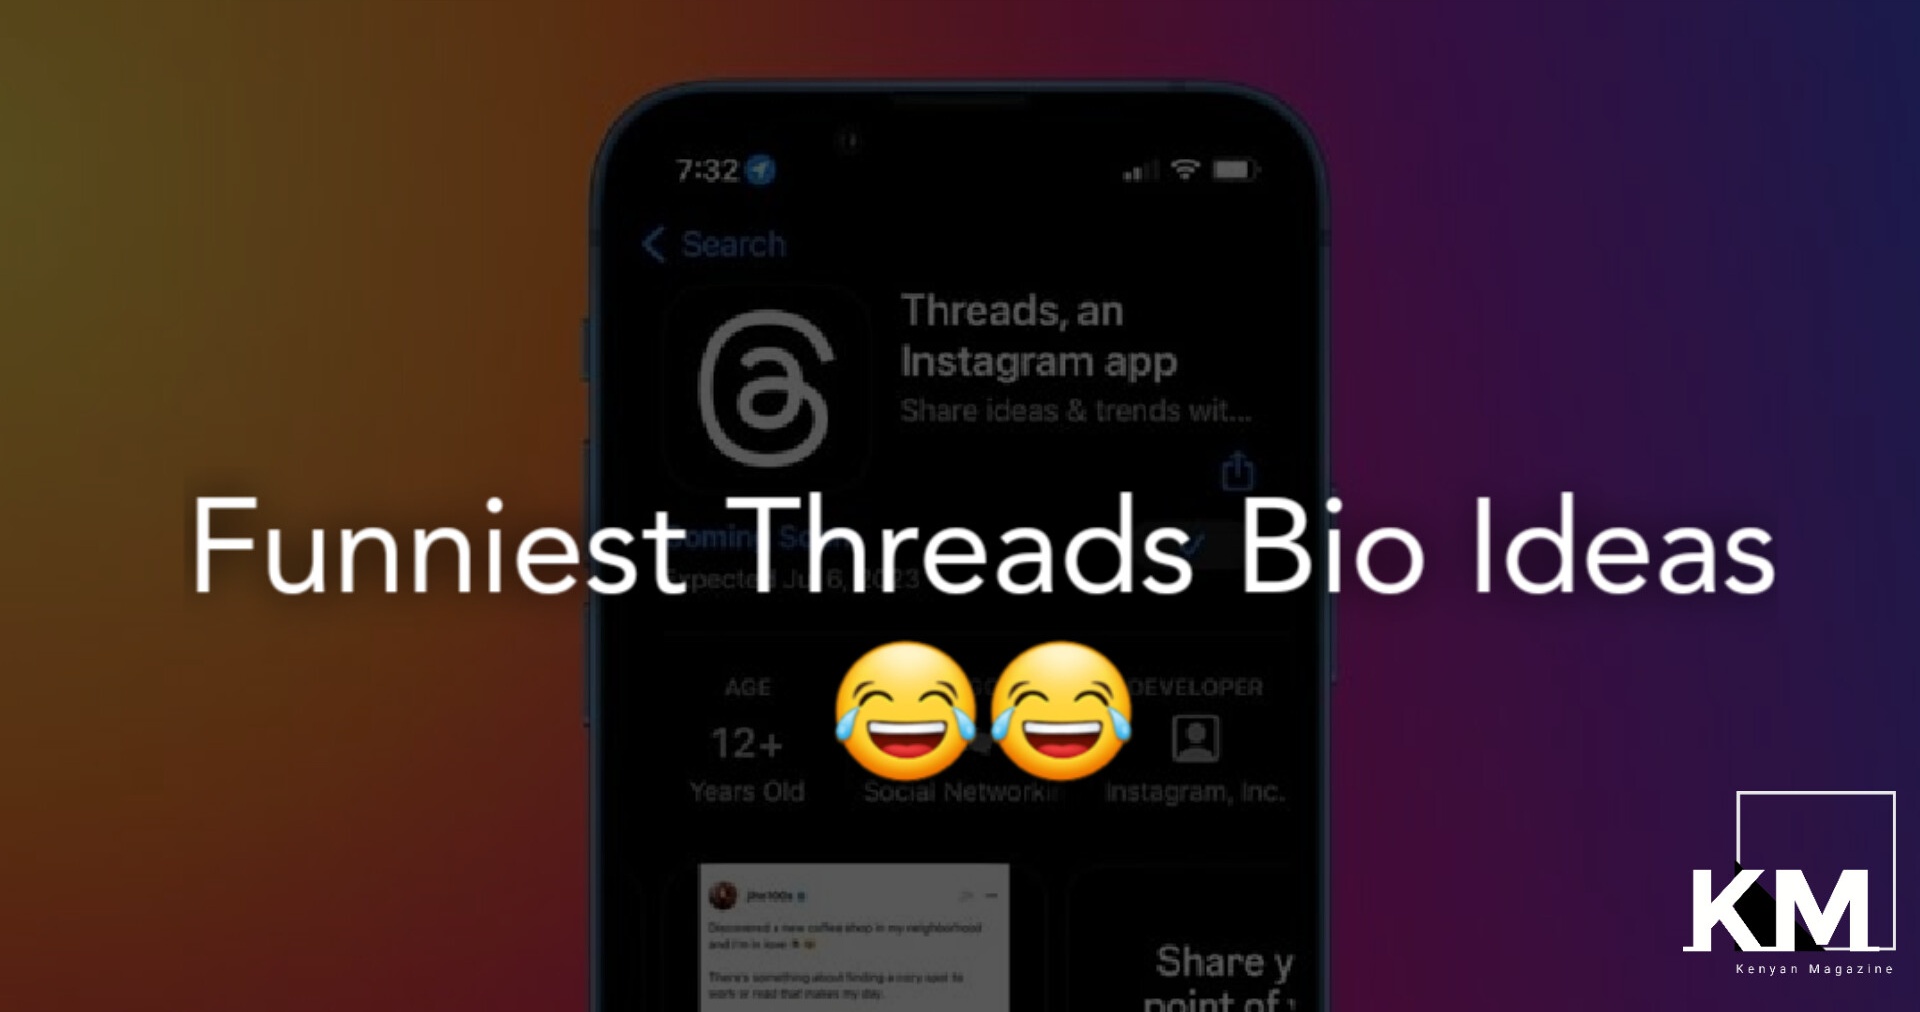 Funny bio ideas for Instagram Threads